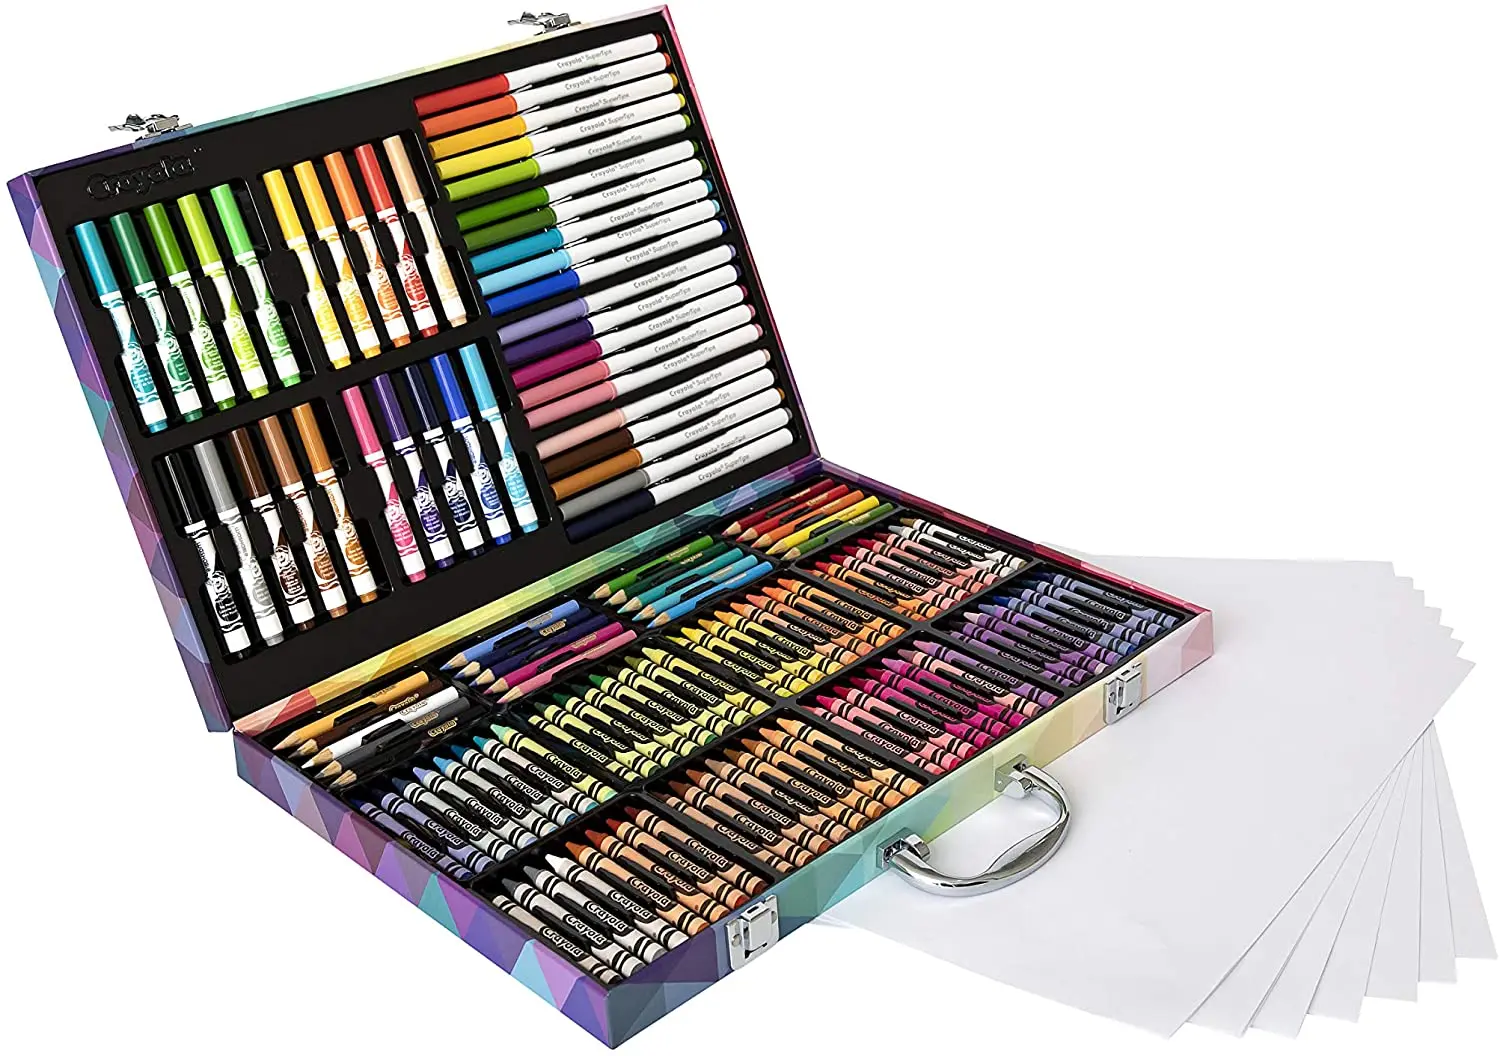 Crayola Ultra Smart Art Case: $ 54.99 at Amazon